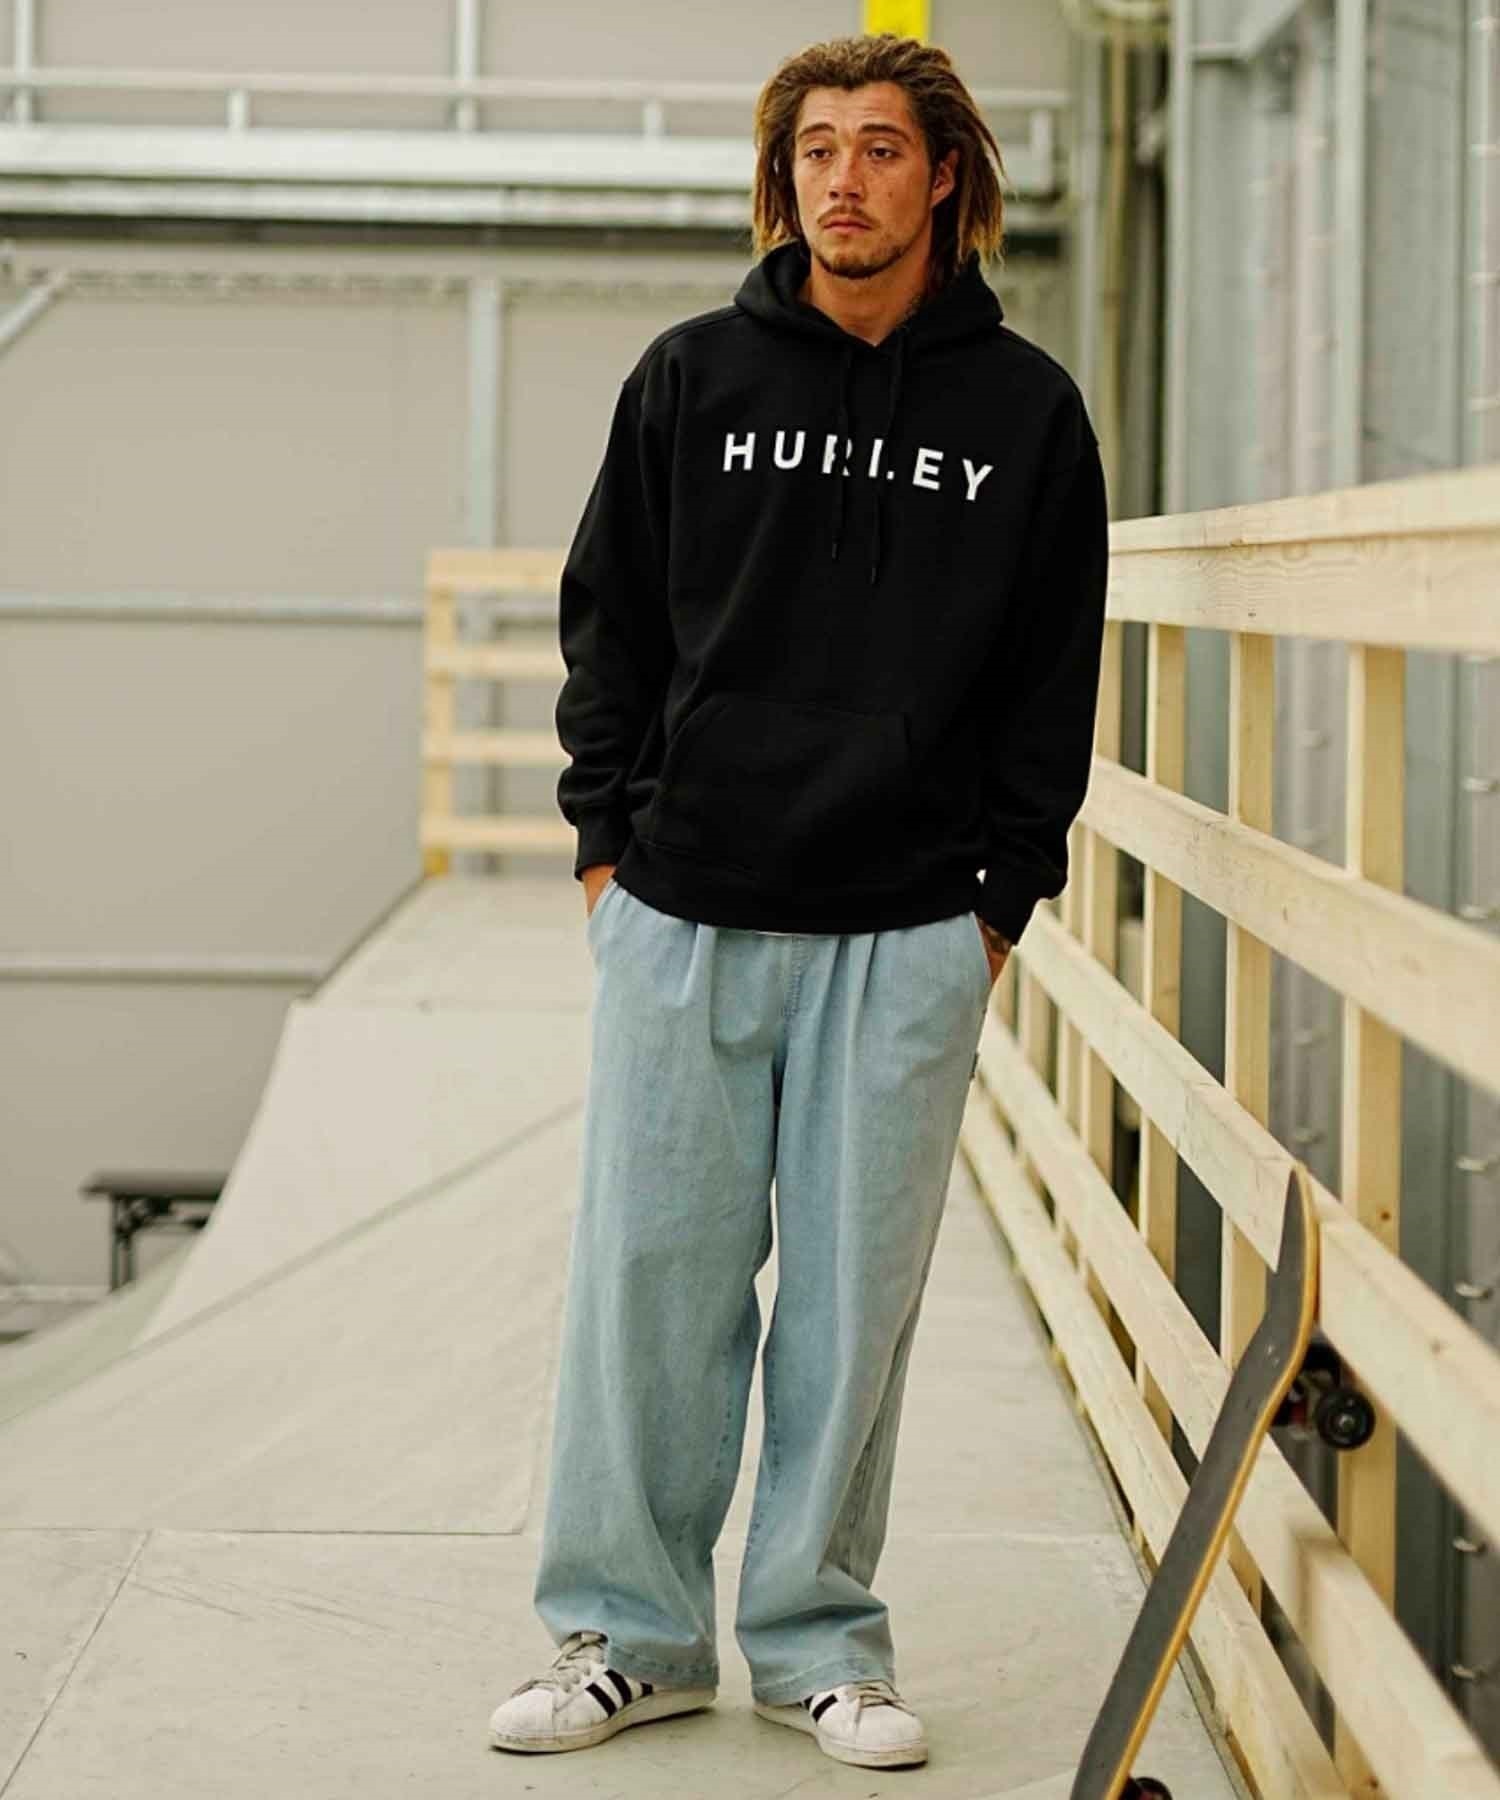 Hurley/ハーレー メンズ パーカー オーバーサイズ プルオーバー 裏起毛